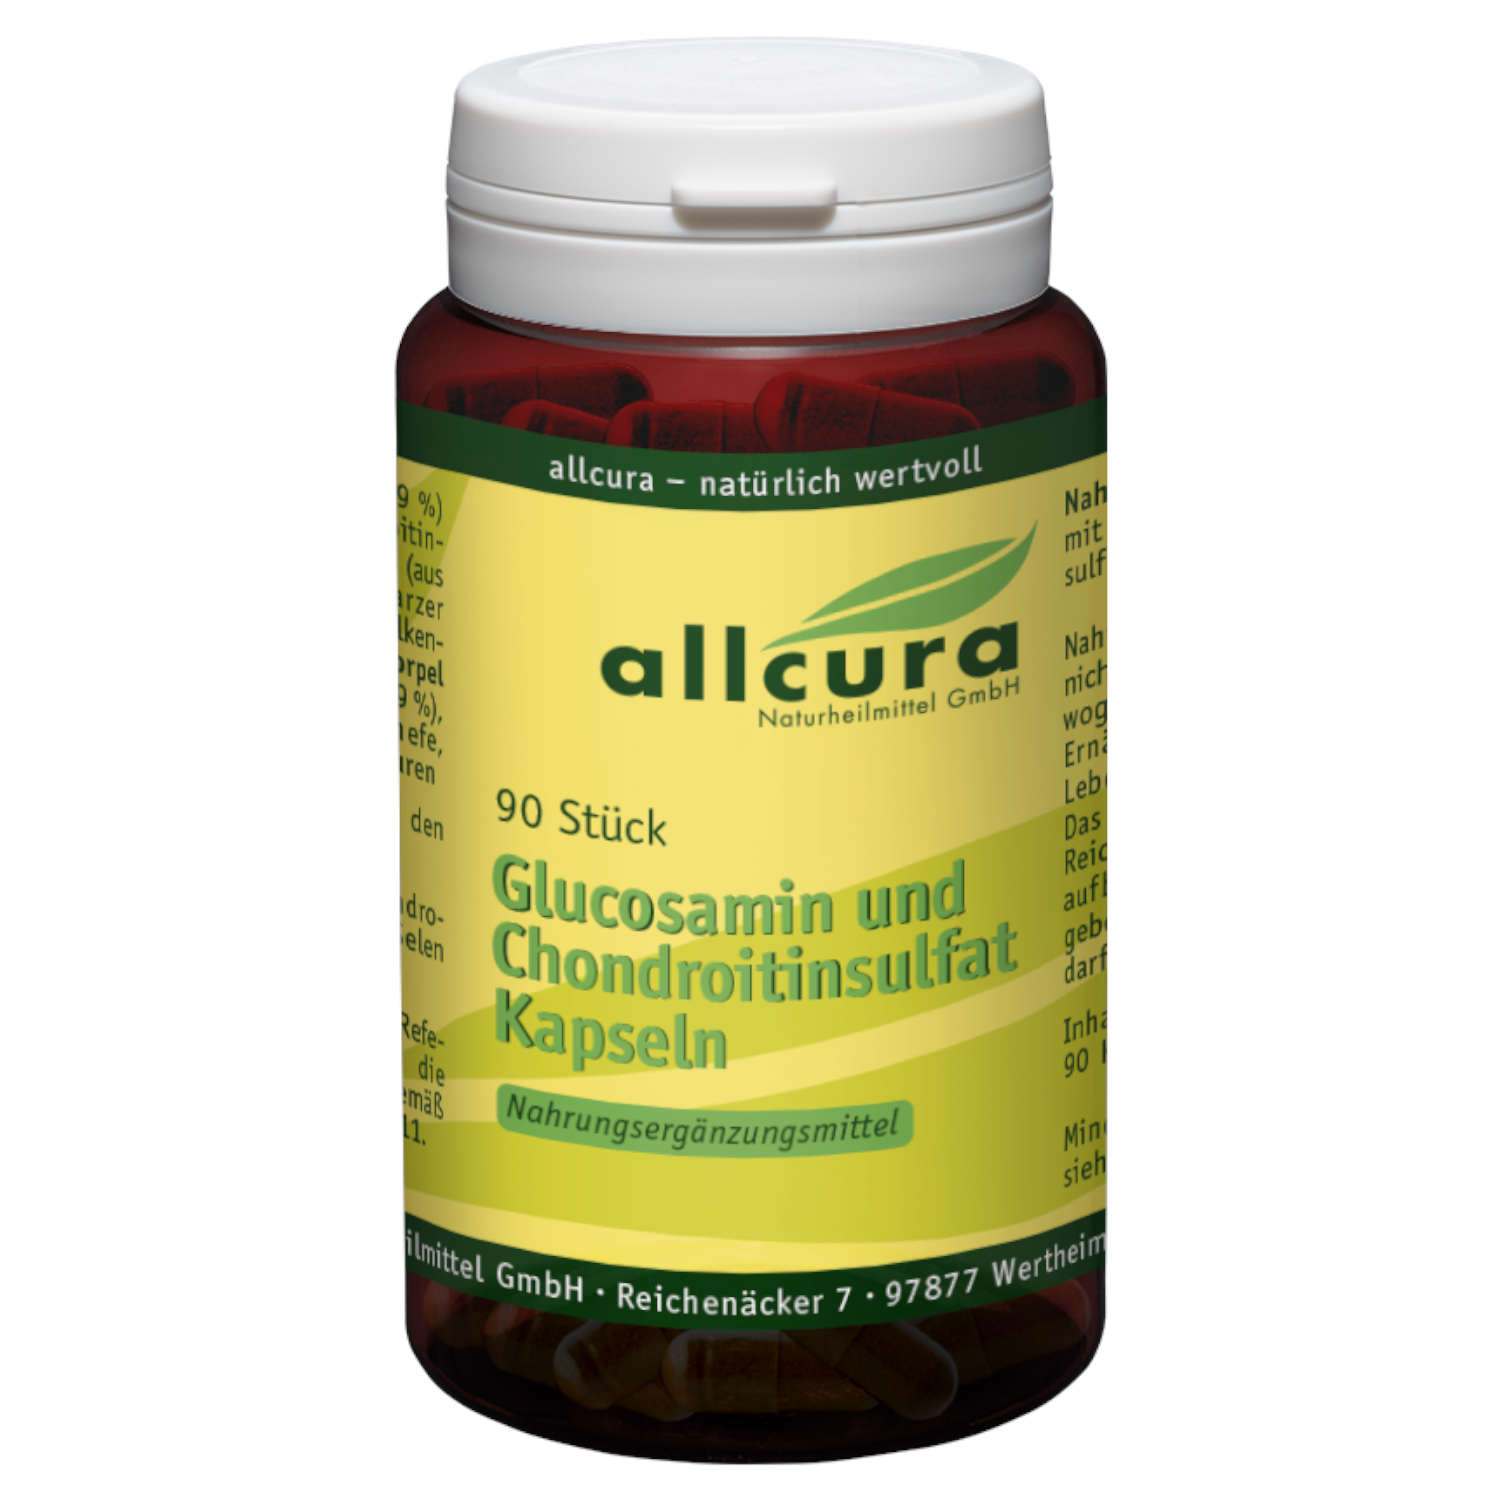 Glucosamin und Chondroitinsulfat Kapseln von allcura - 90 Stück